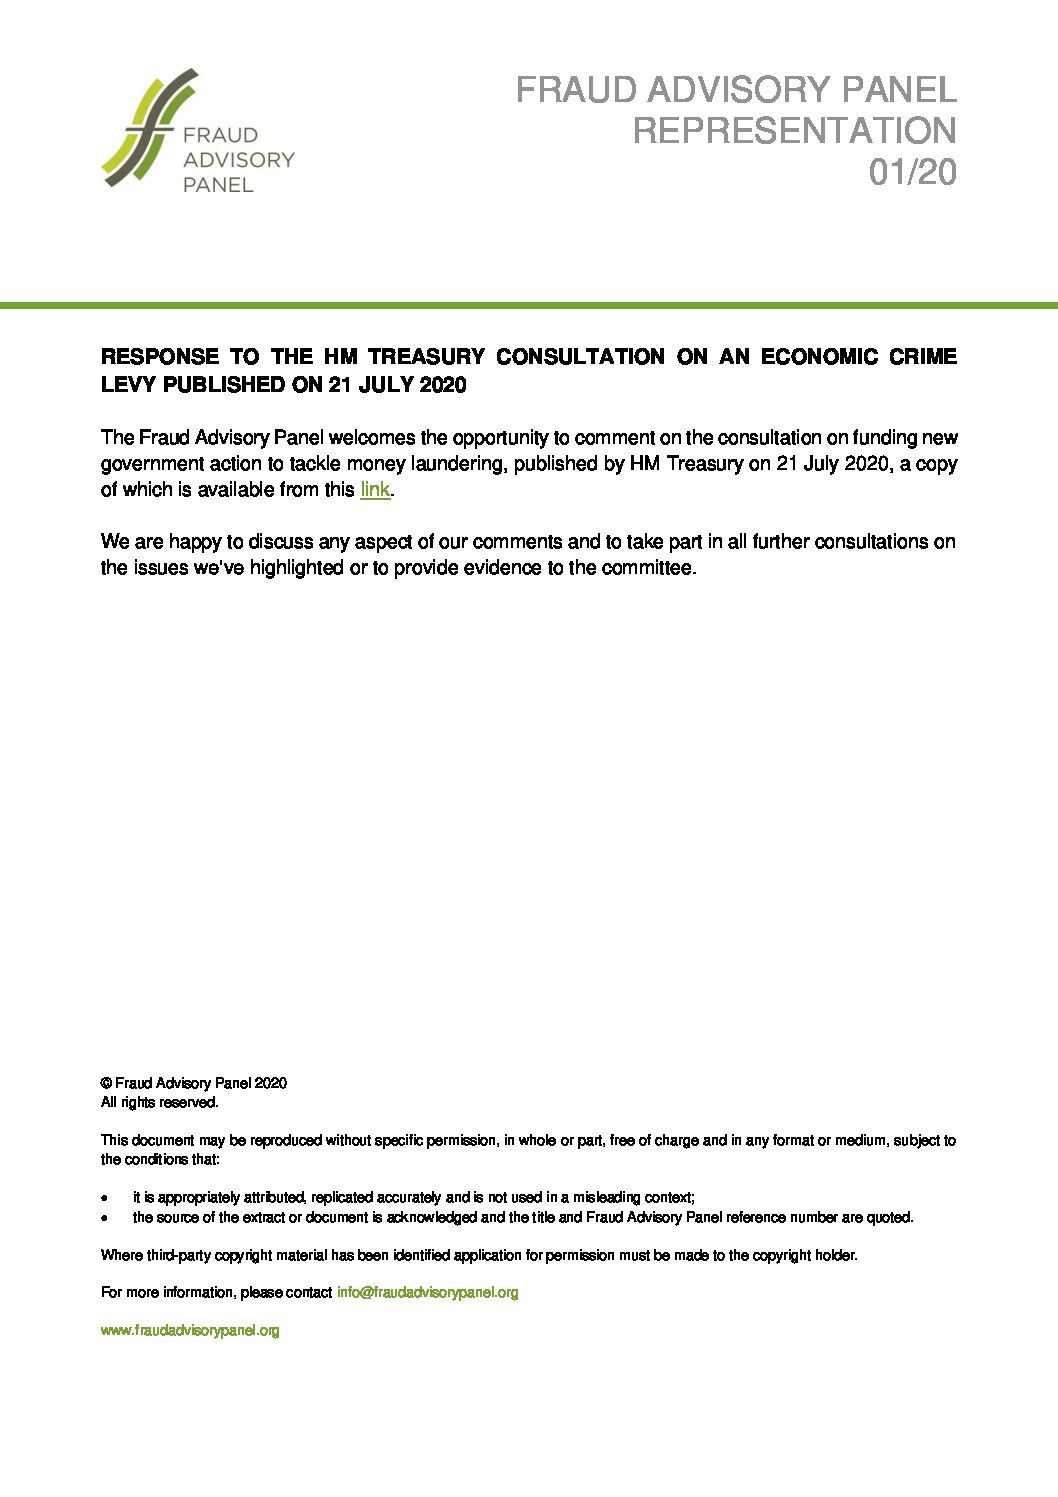 FAP Response to HMT Economic Crime Levy (Final) 13Oct20 document cover